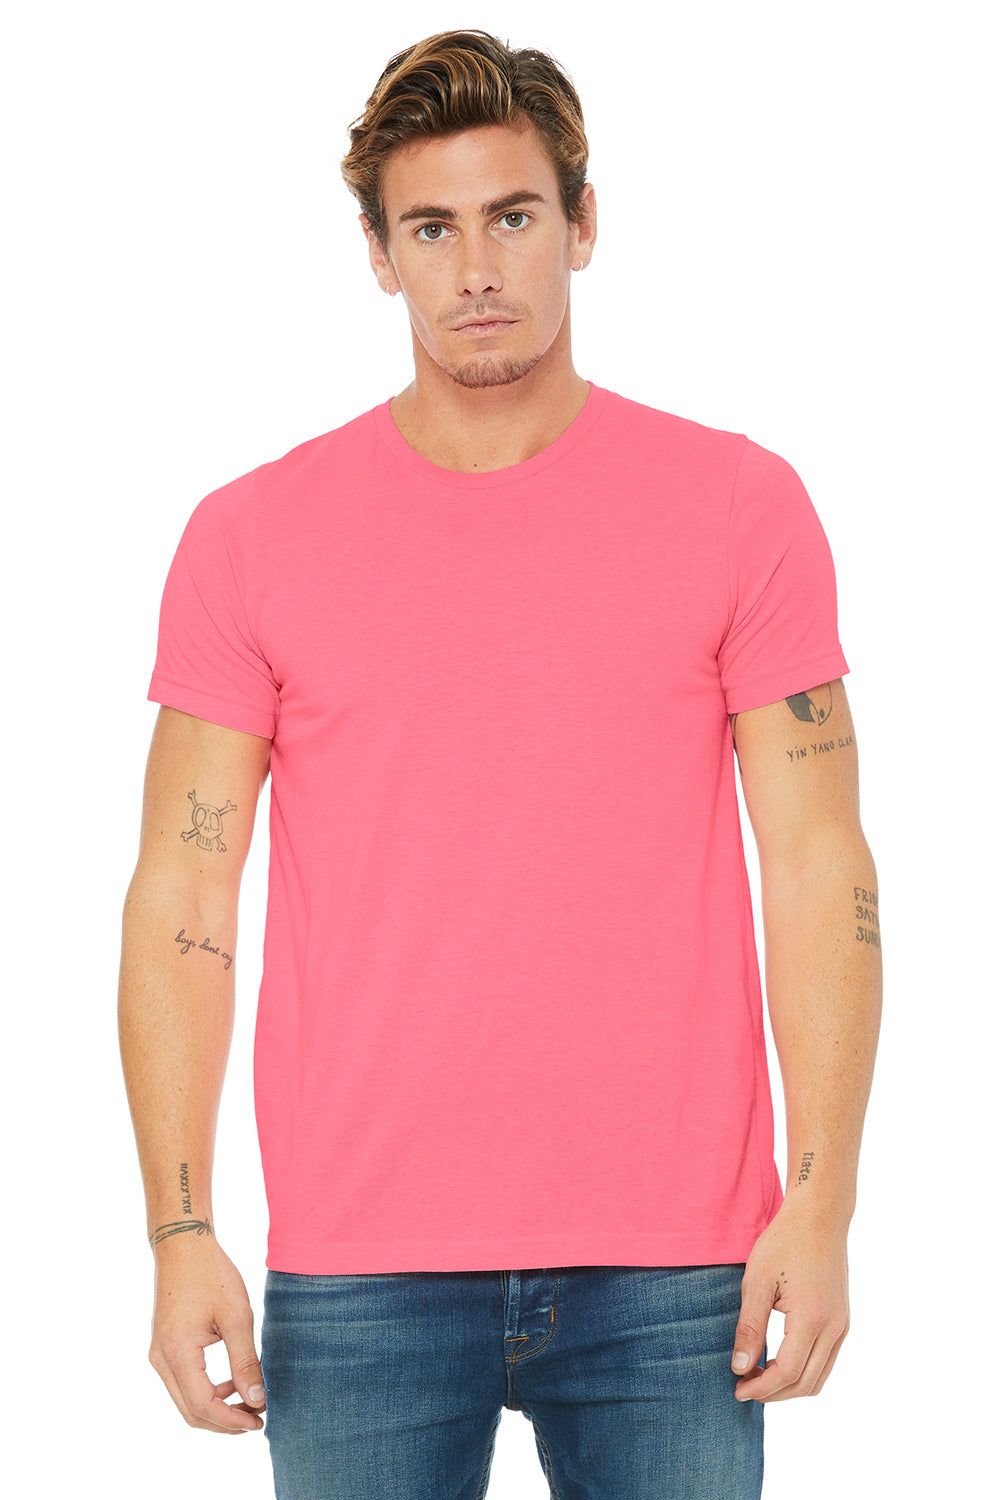 Bella + Canvas 3650 Mens Short Sleeve Crewneck T-Shirt Neon Pink Front